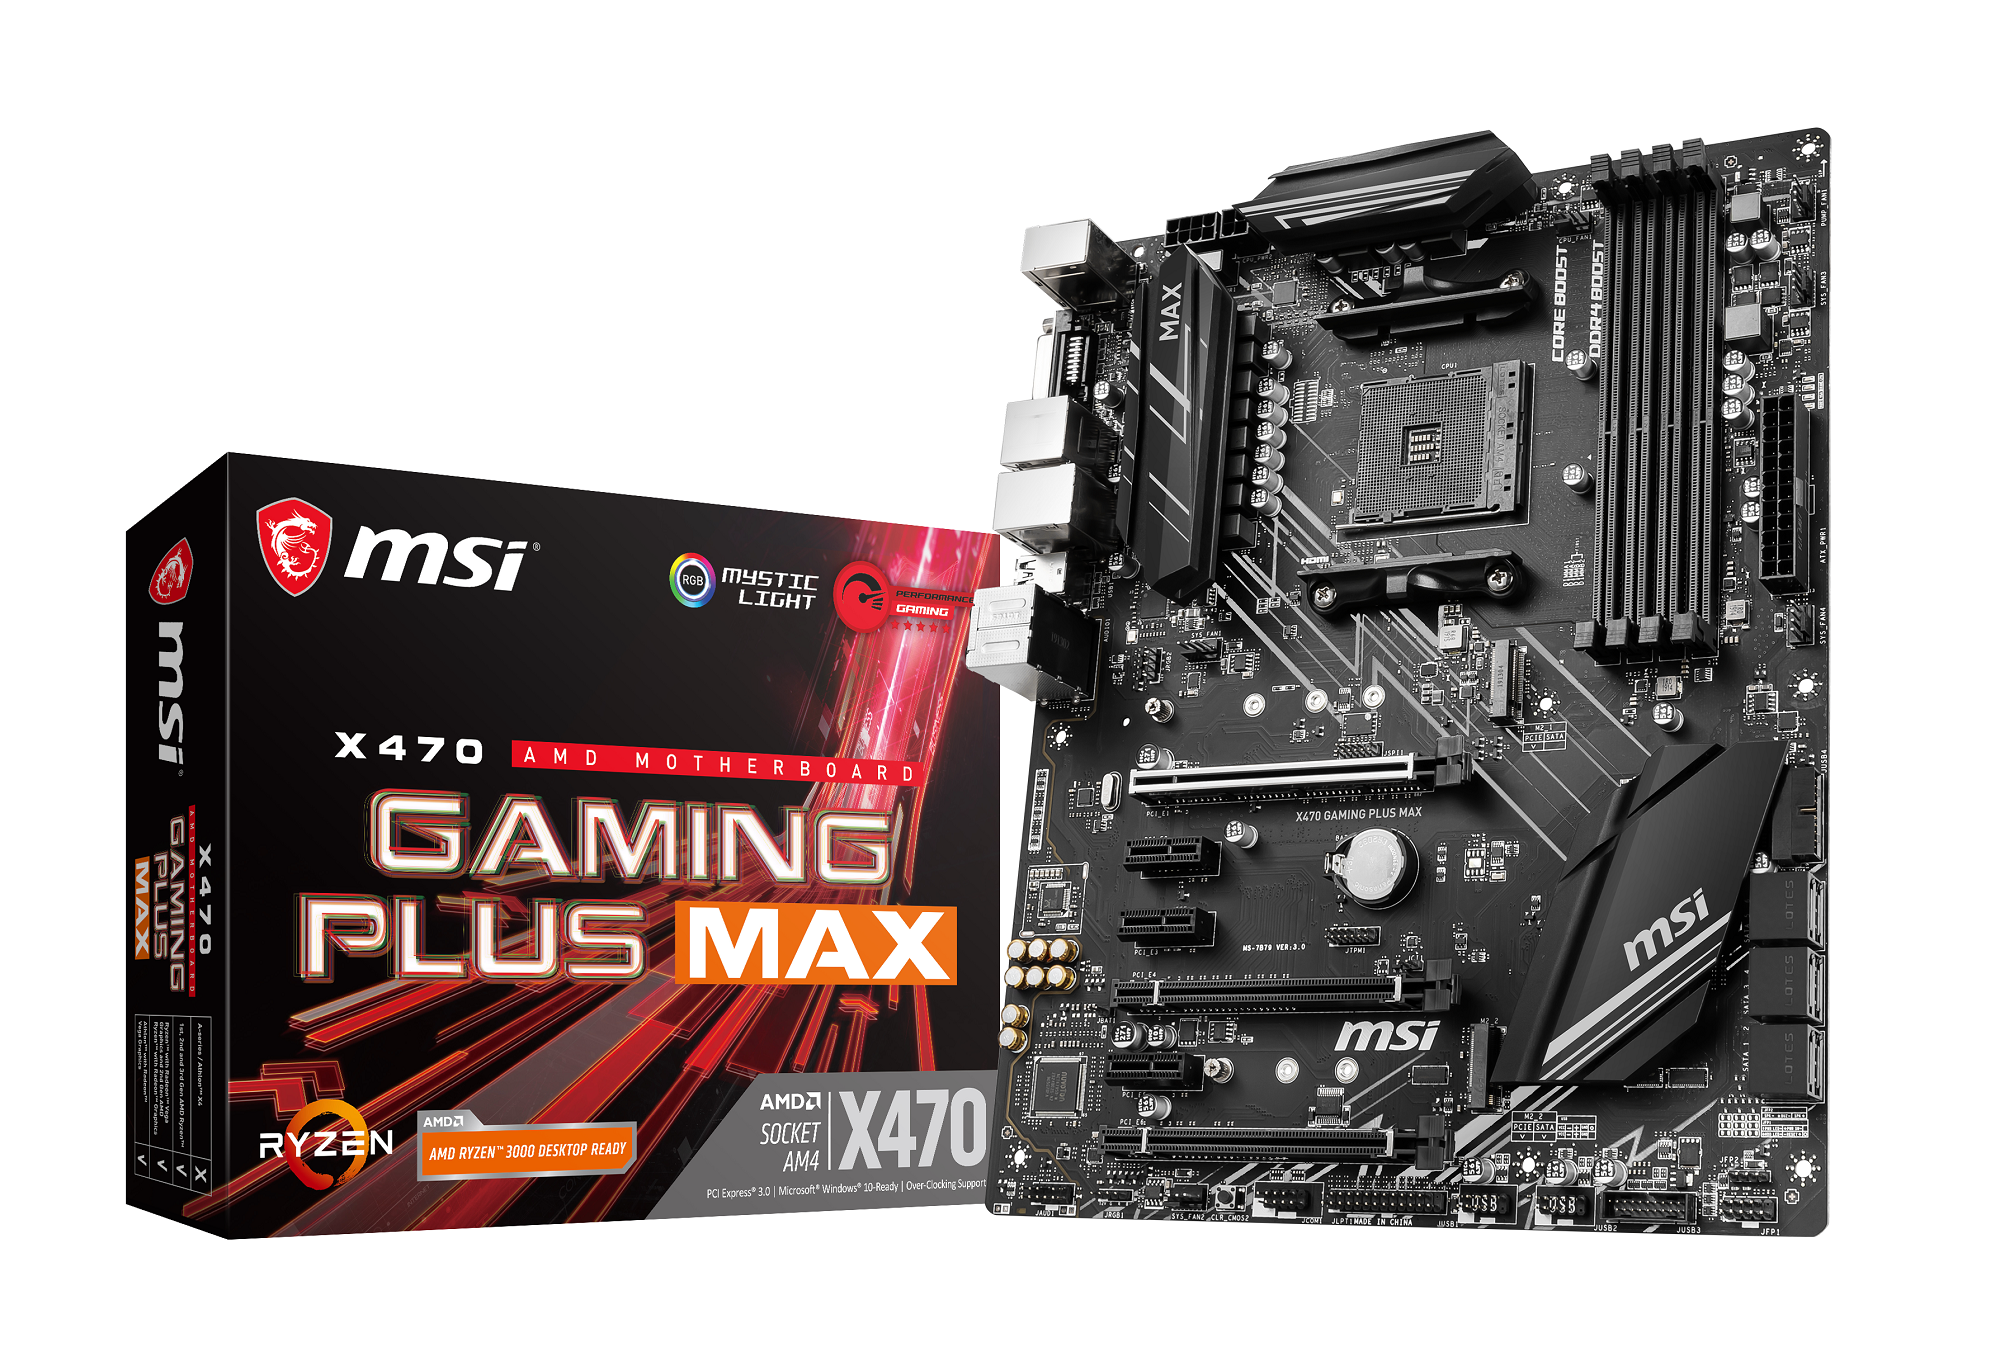 
Carte mère AMD X470 Gaming Plus MAX MSI
